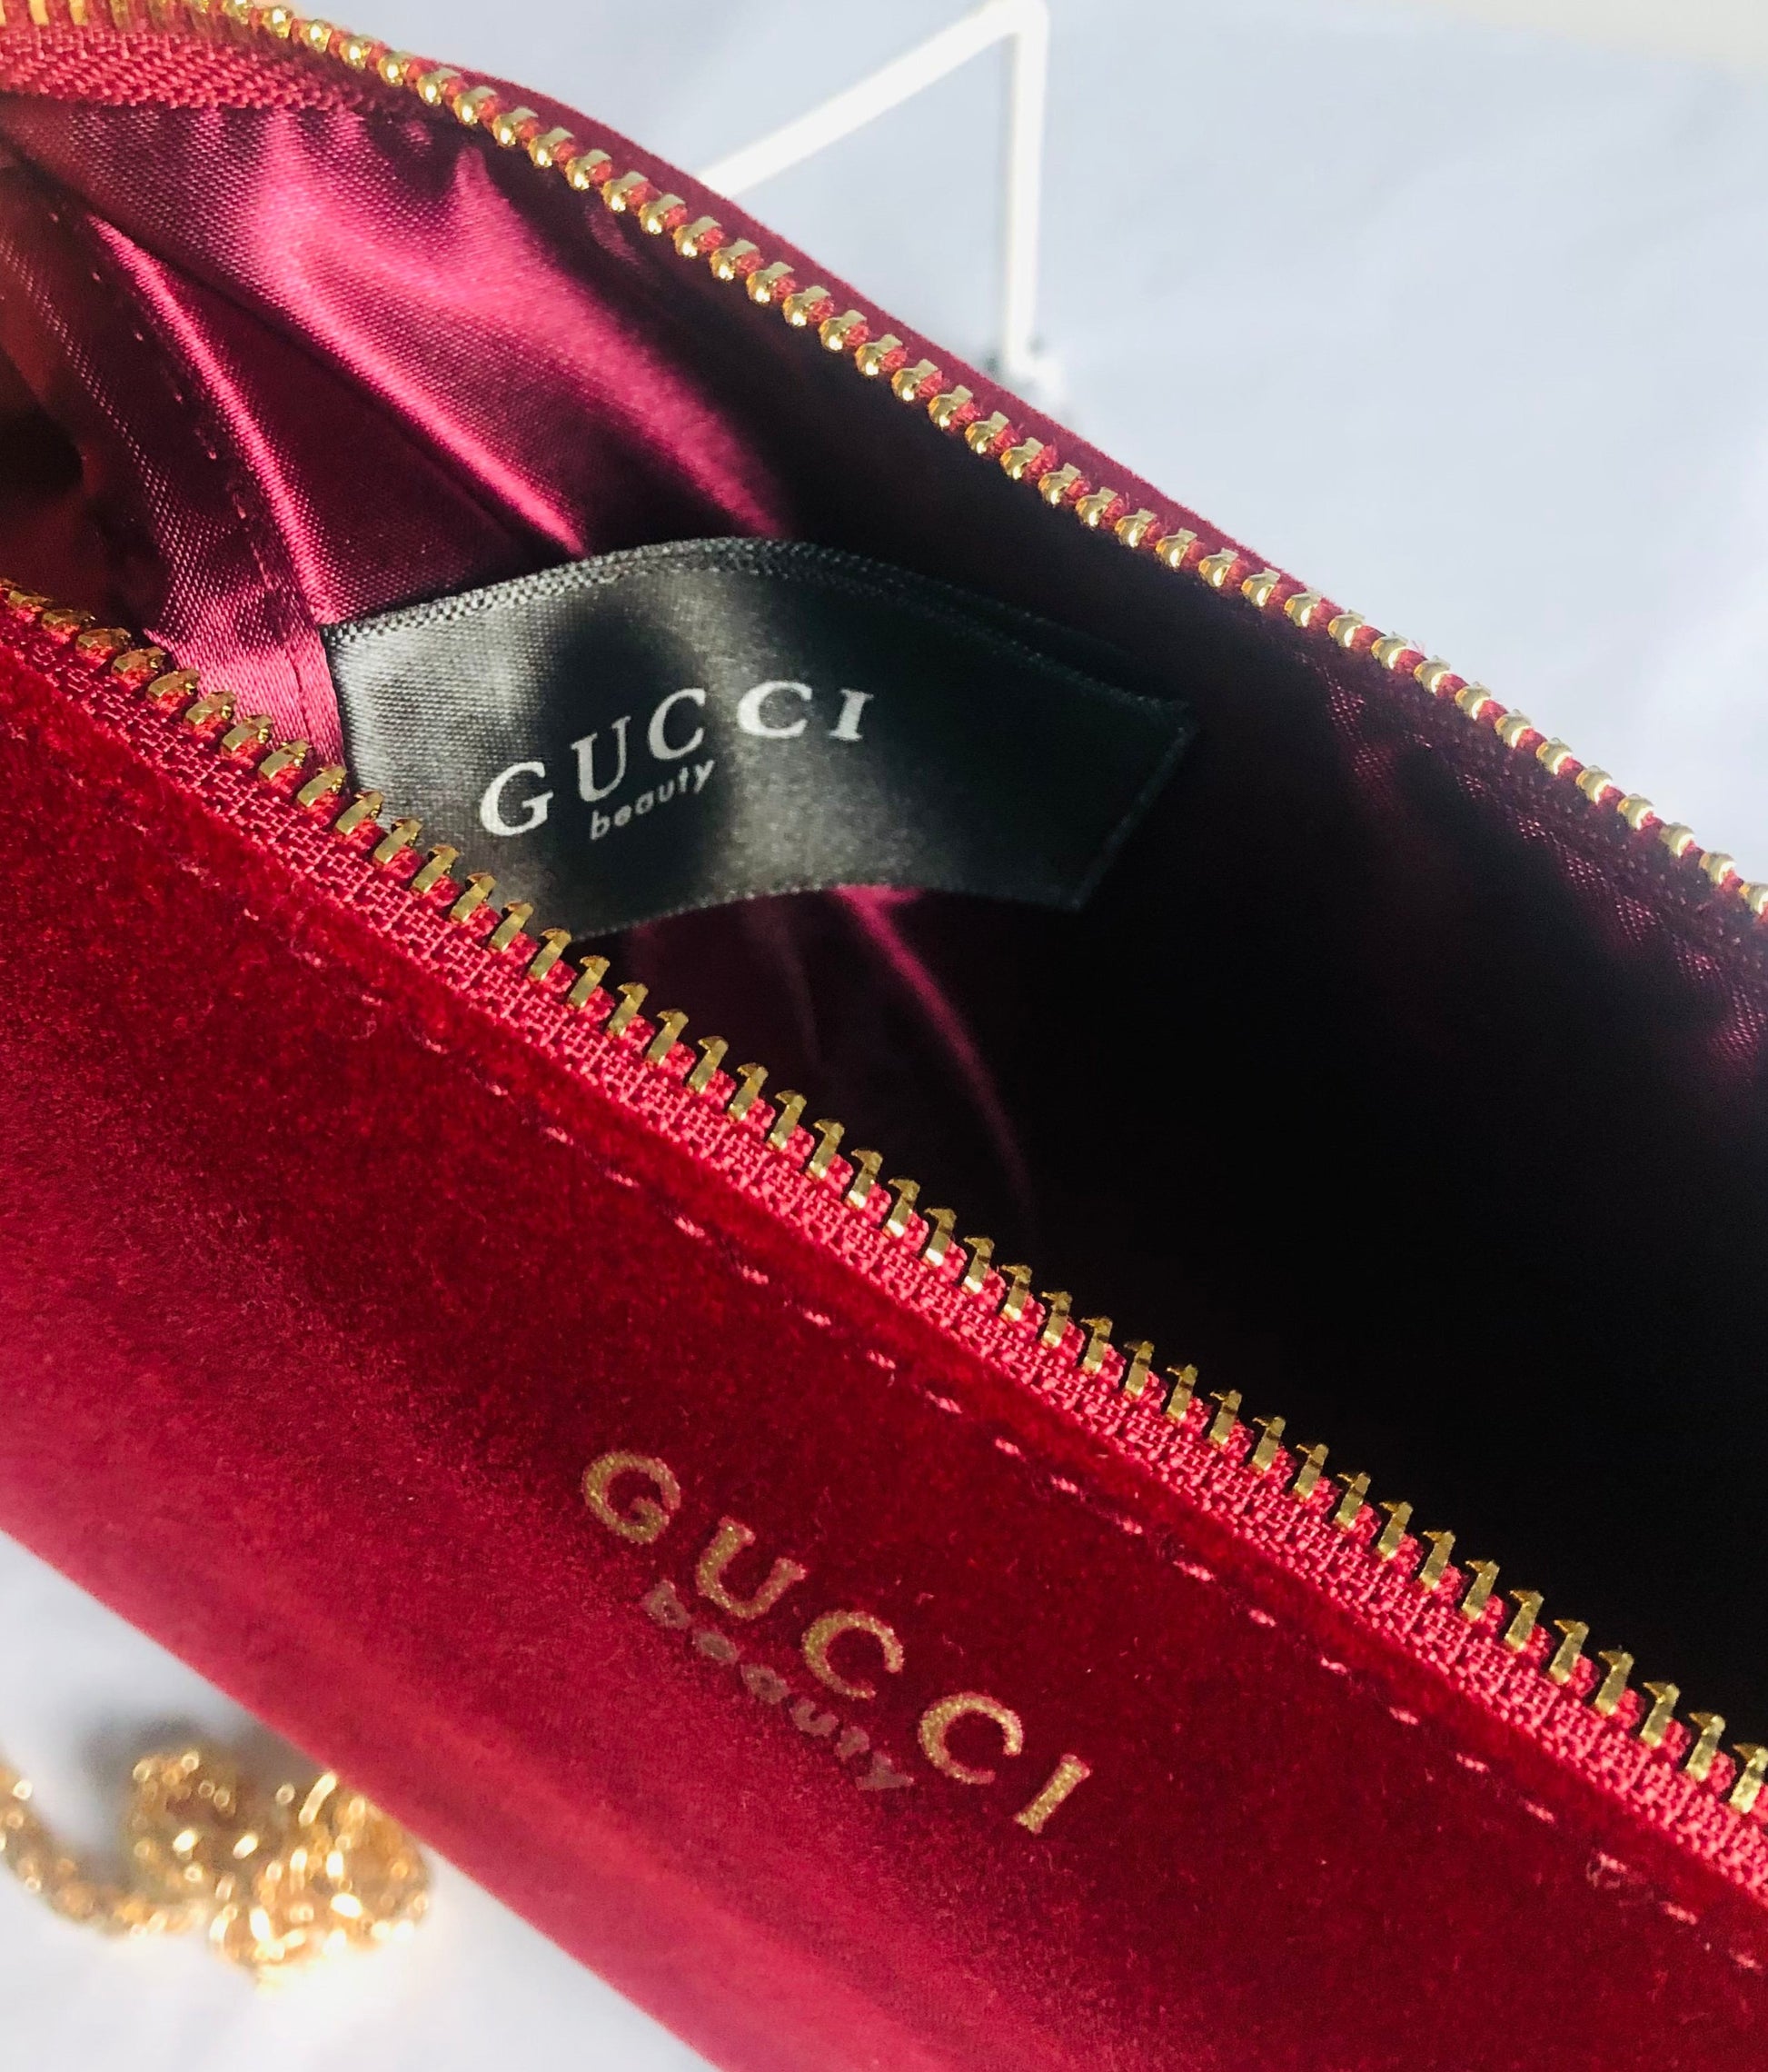 Gucci Beaute Pouch Clutch Burgundy Velvet w/o Chain – Capsule Gems